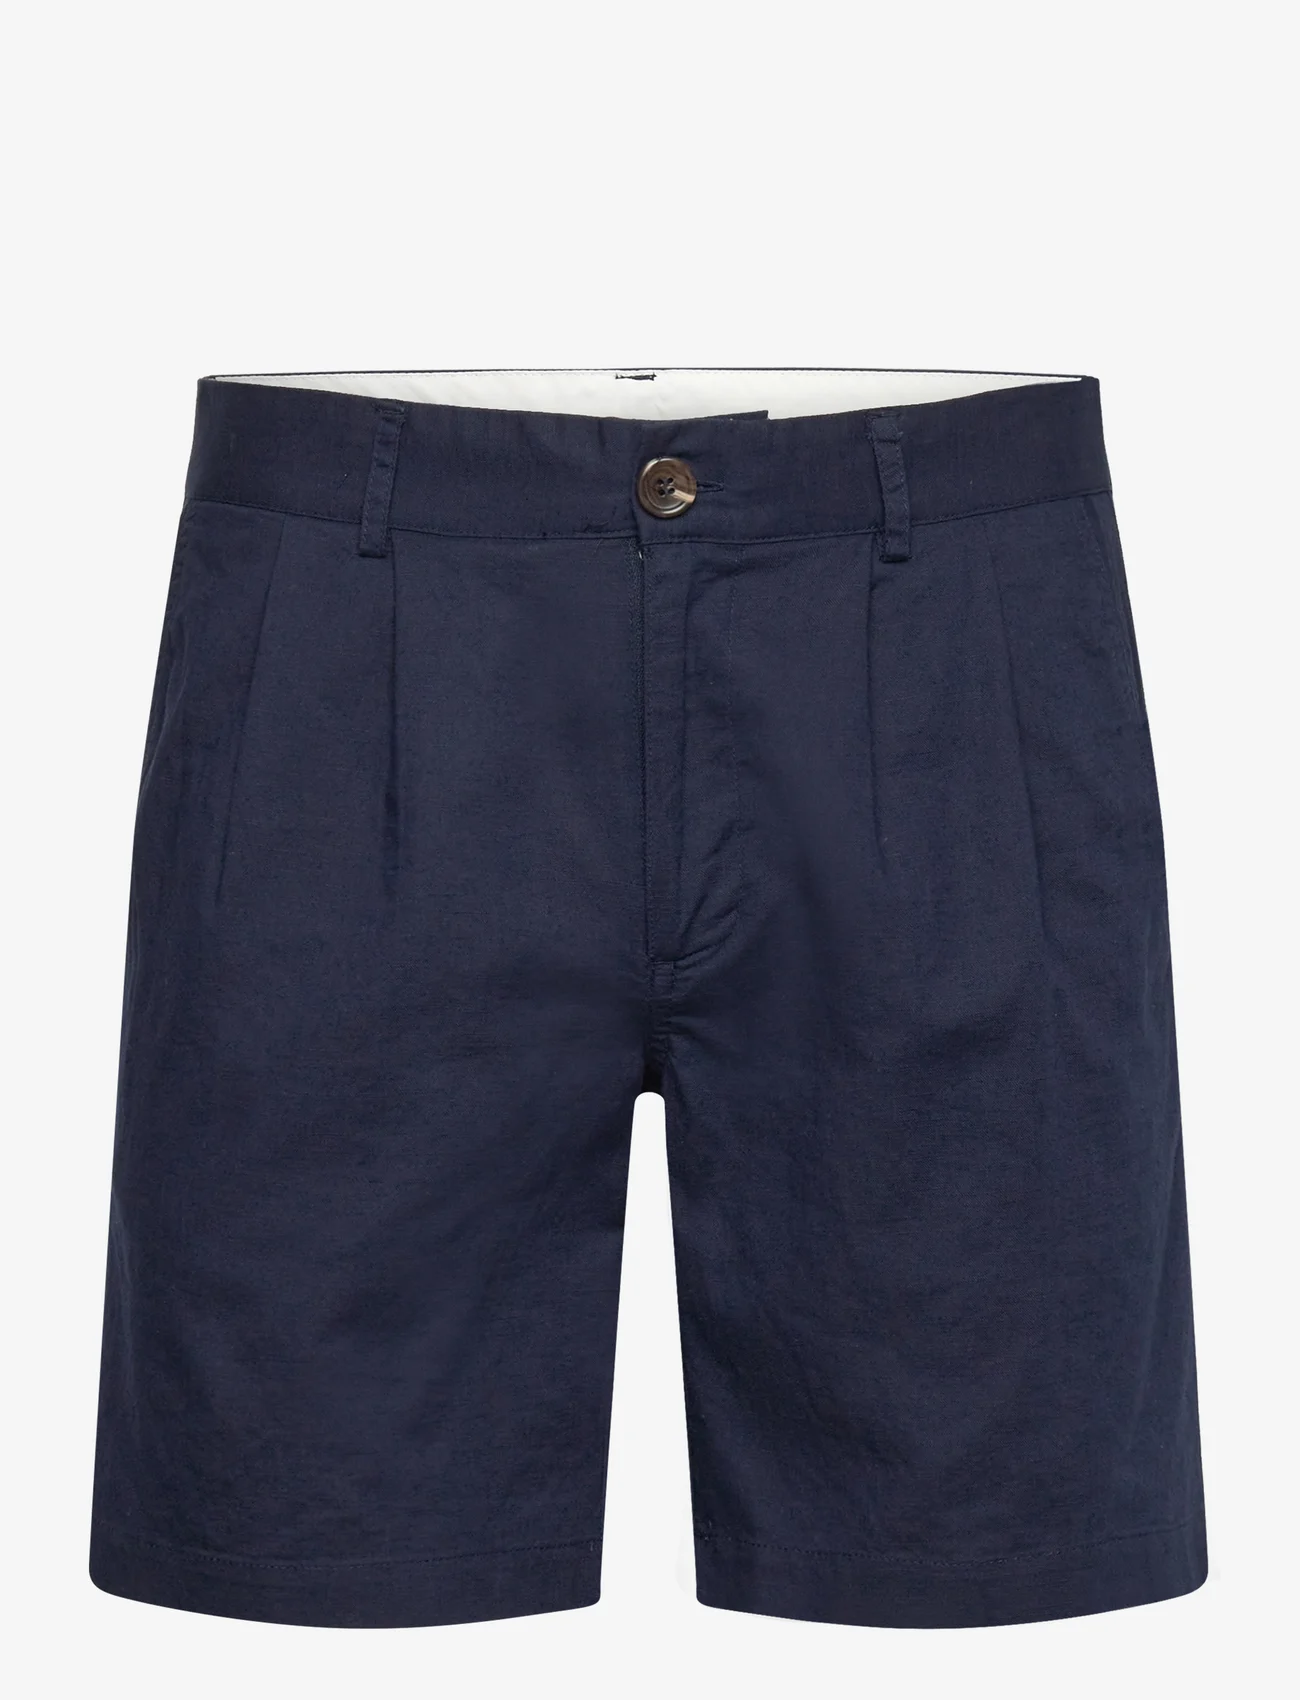 Bruuns Bazaar - LinowBBGermain shorts - hørshorts - navy blazer - 0